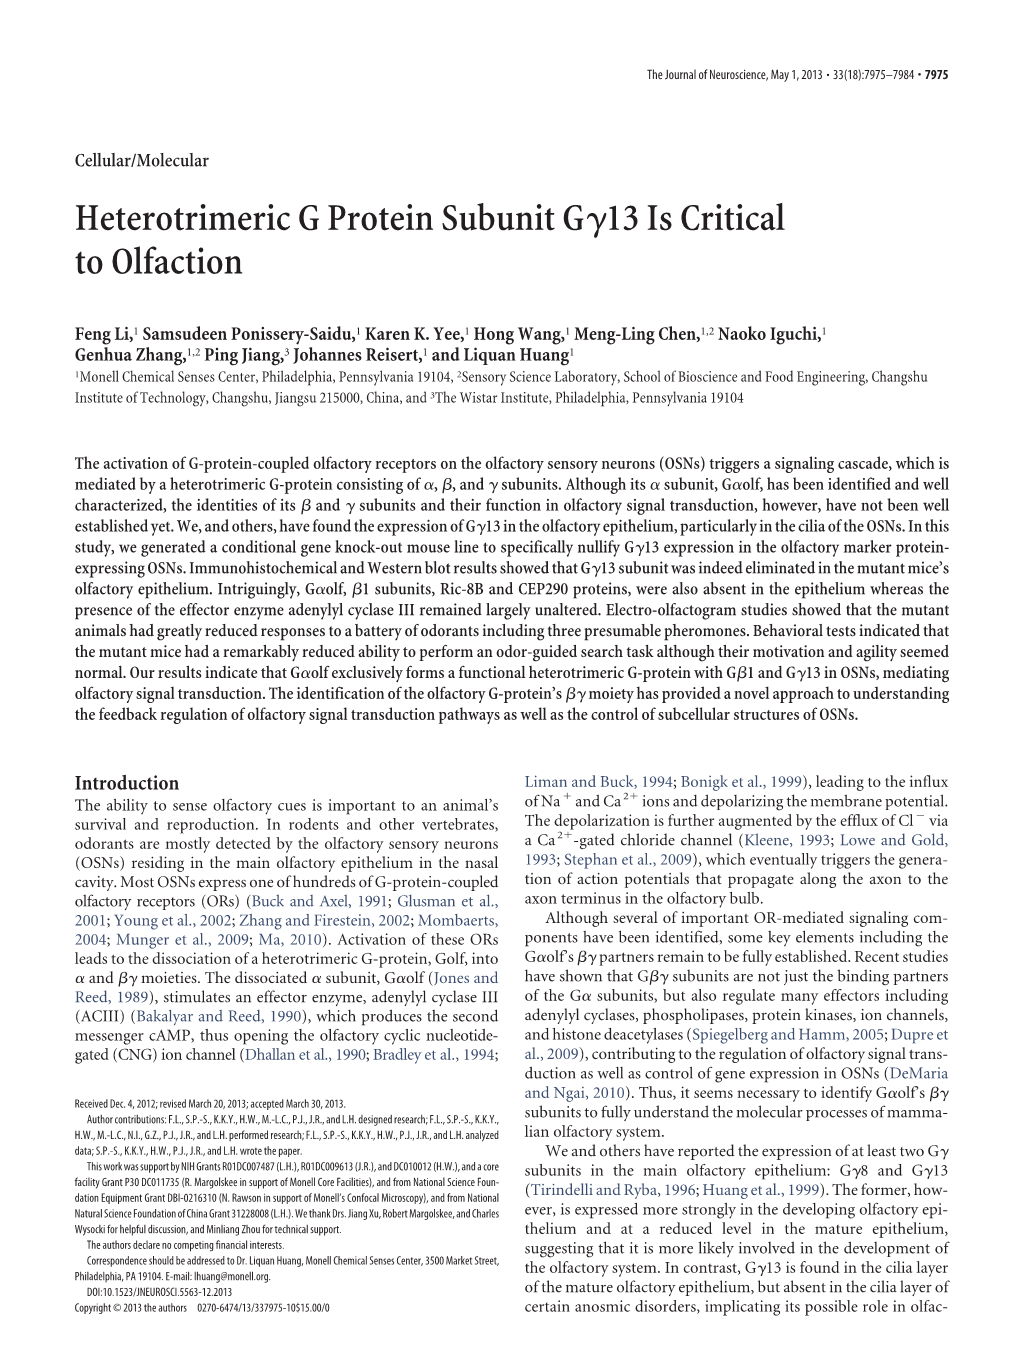 Heterotrimeric G Protein Subunit G 13 Is Critical to Olfaction